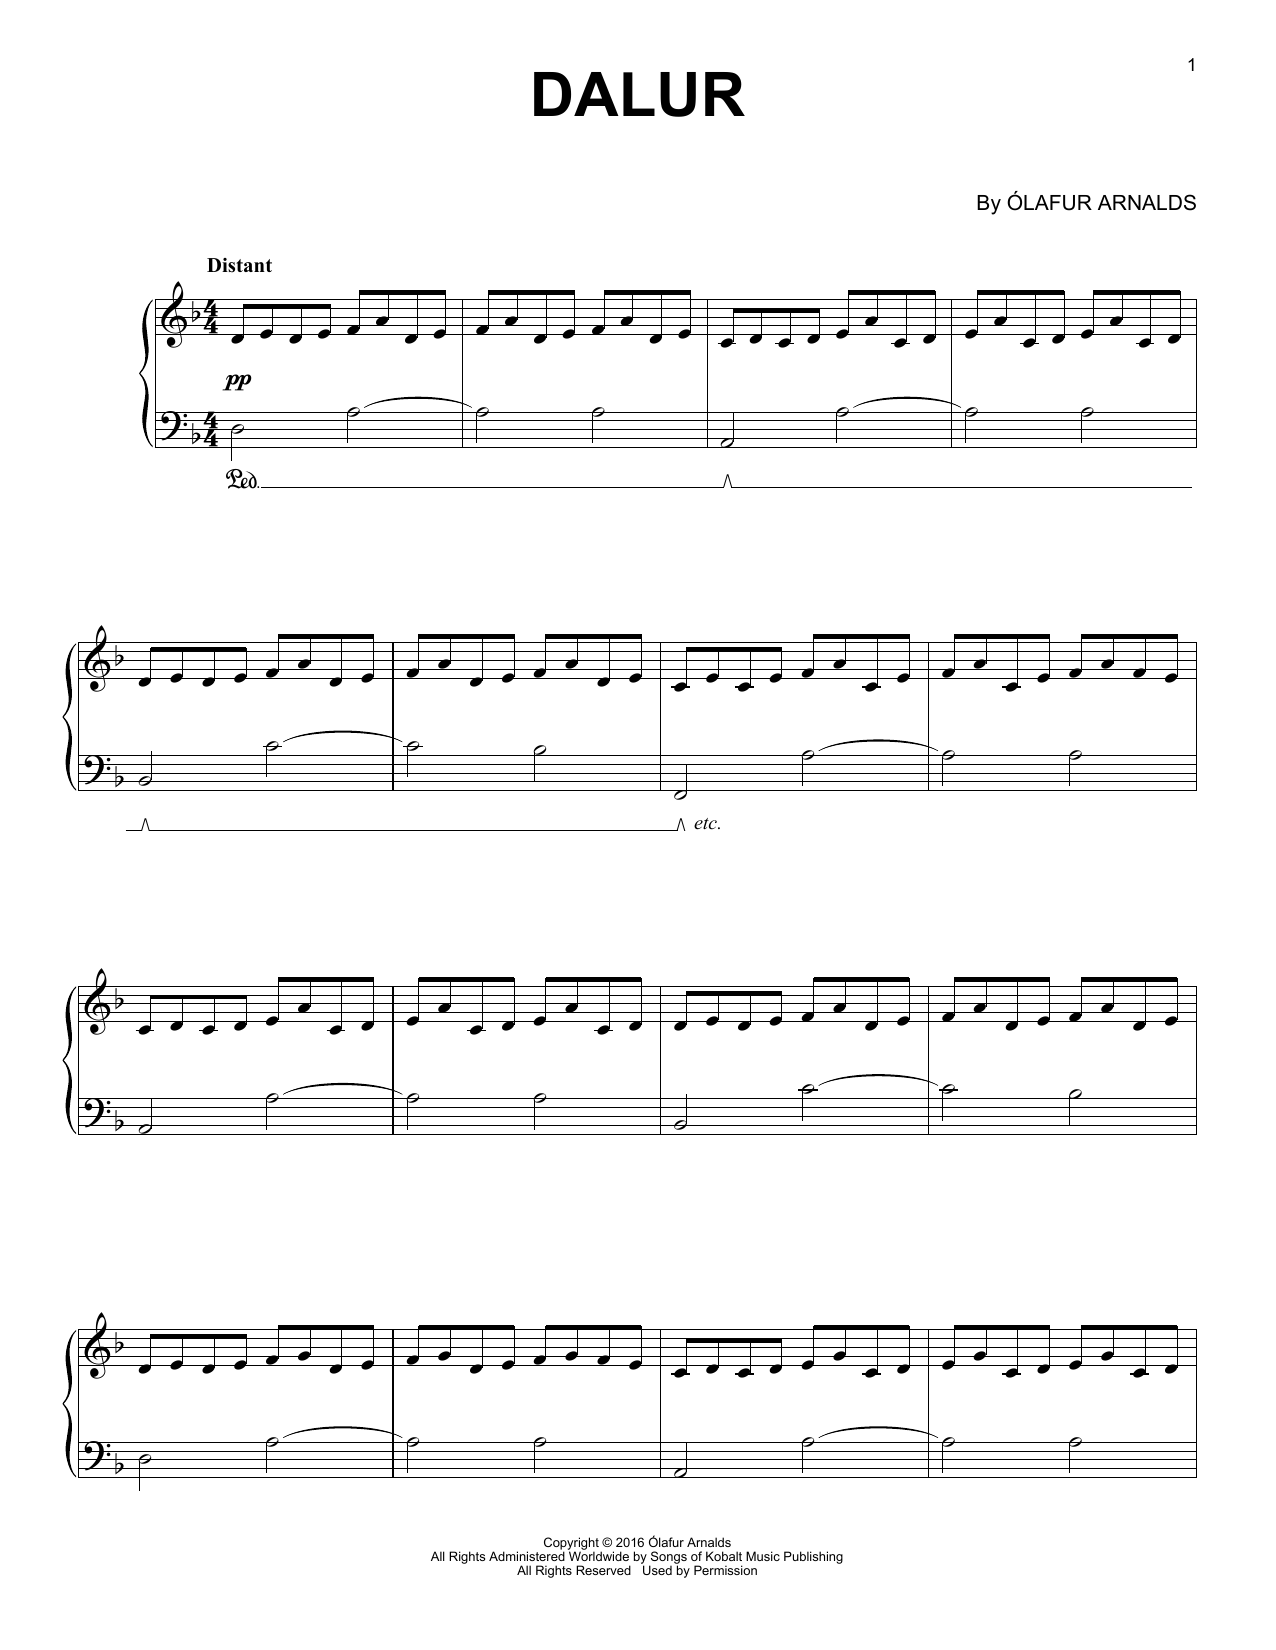 Ólafur Arnalds Dalur Sheet Music Notes & Chords for Piano Solo - Download or Print PDF